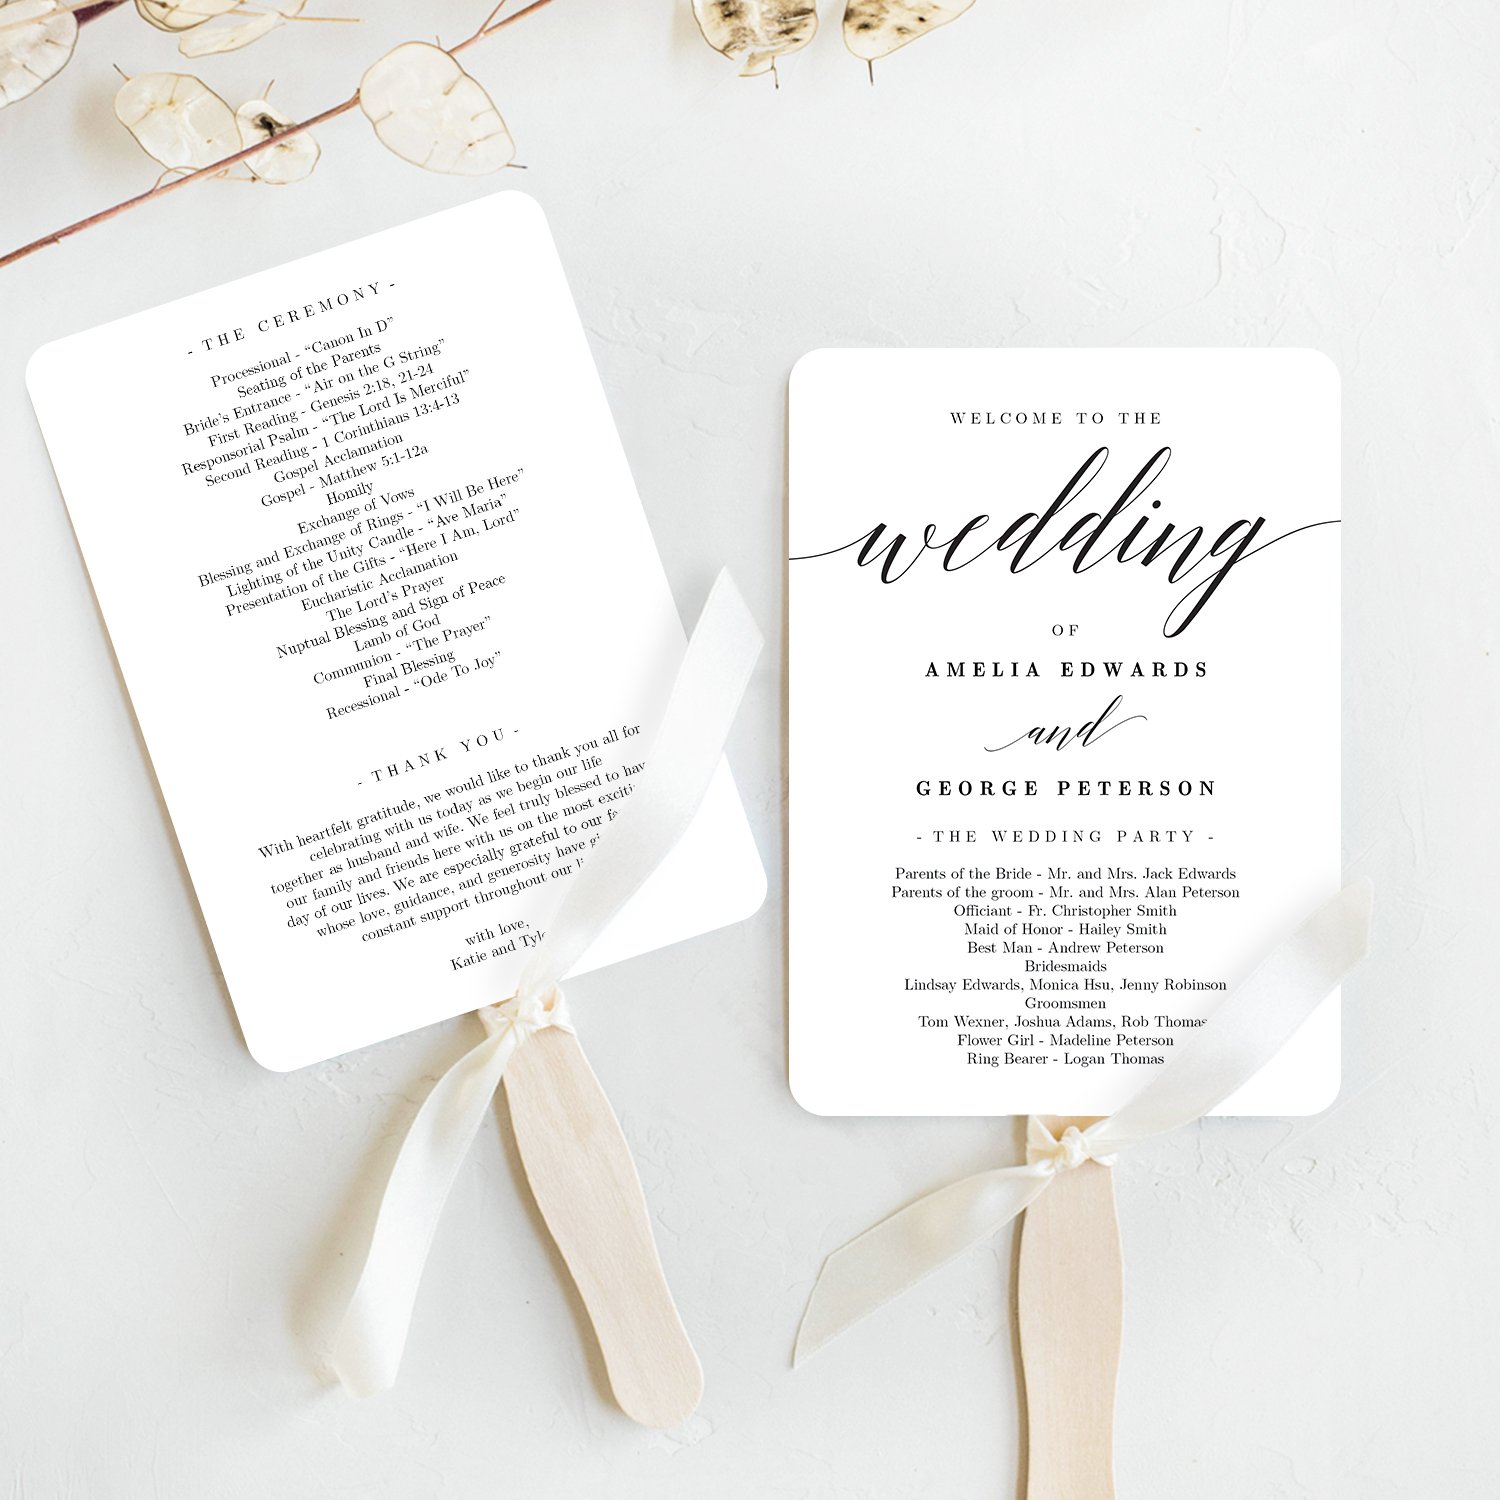 Do You Need Wedding Ceremony Programs?